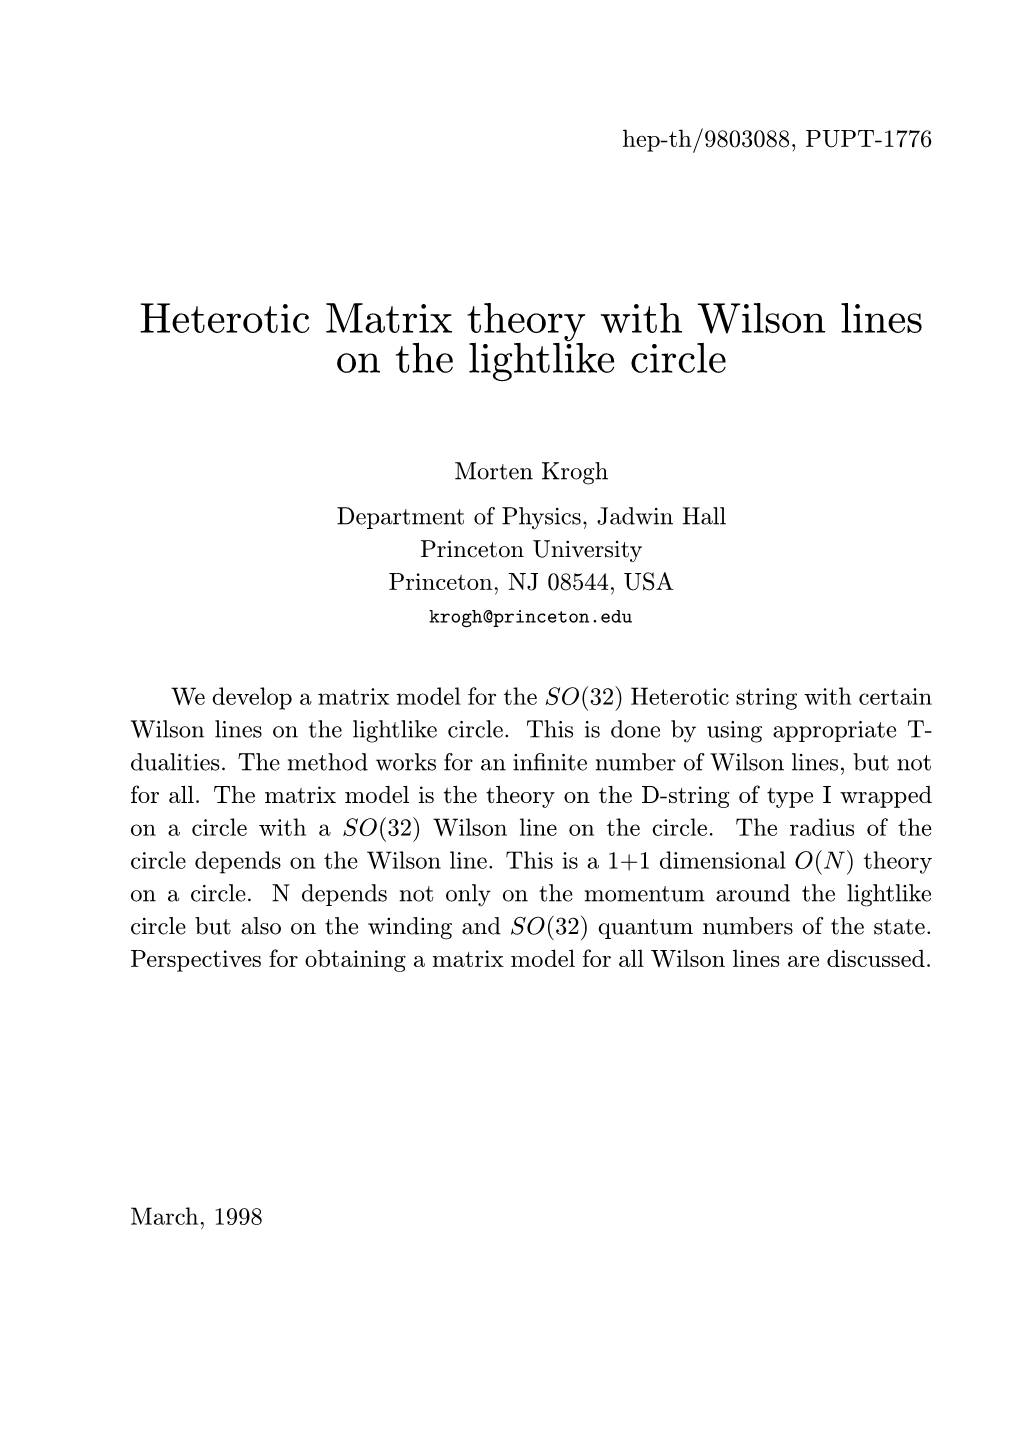 Heterotic Matrix Theory with Wilson Lines on the Lightlike Circle